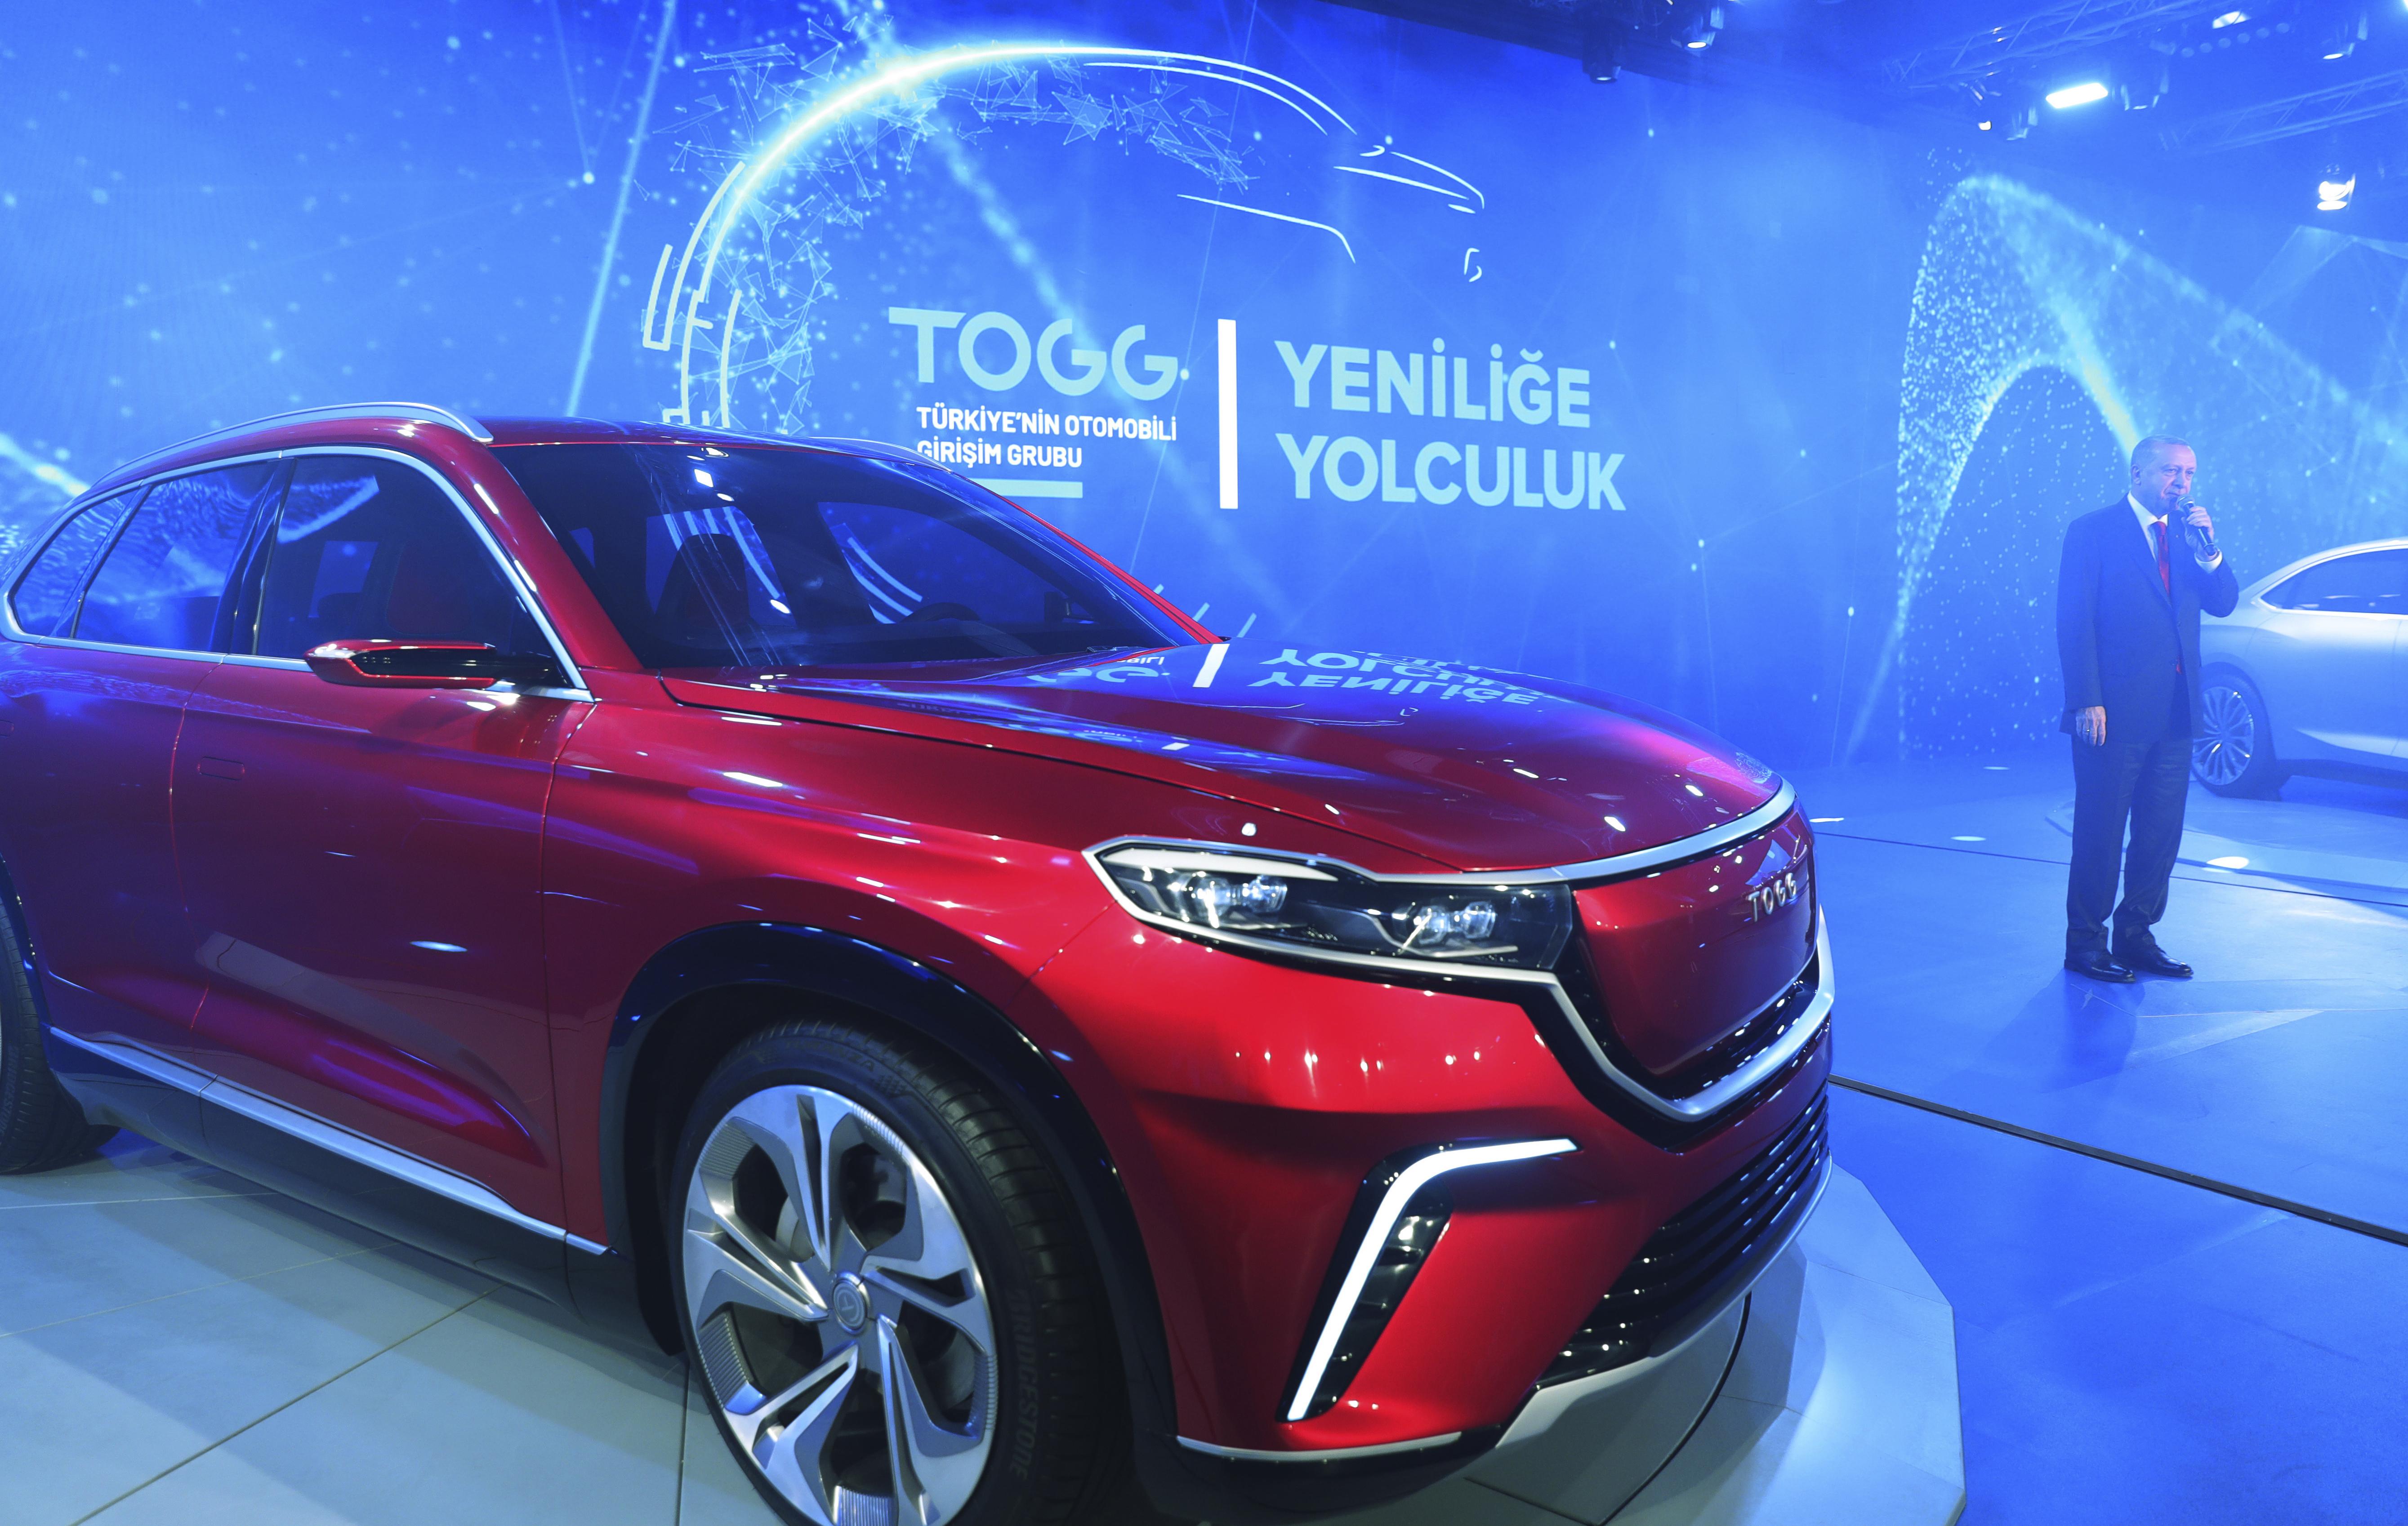 Turkish leader unveils prototypes of 1st domestic car The Spokesman